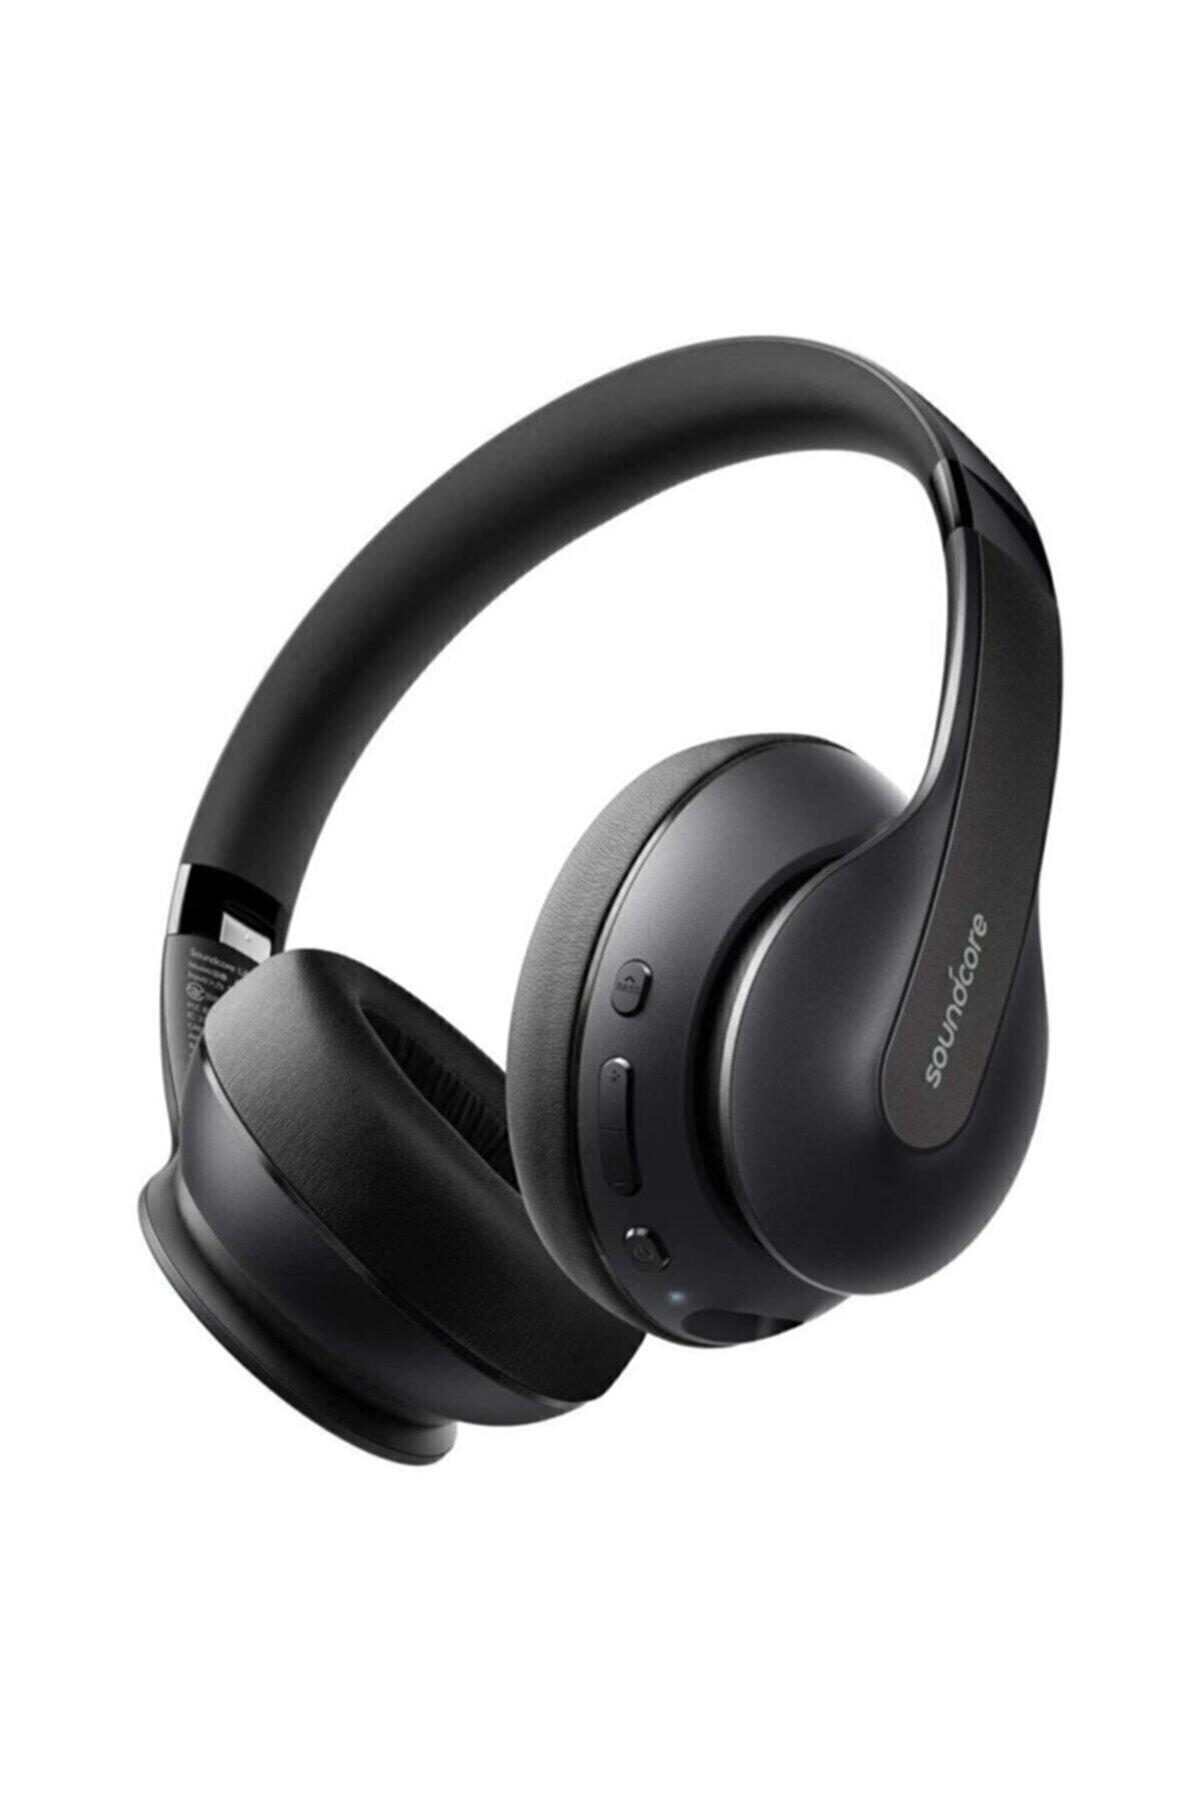 Anker A3032 Soundcore Life Q10 Kablosuz Bluetooth 5.0 Kulaklık - 60 Saate Varan Şarj - Siyah Gri -